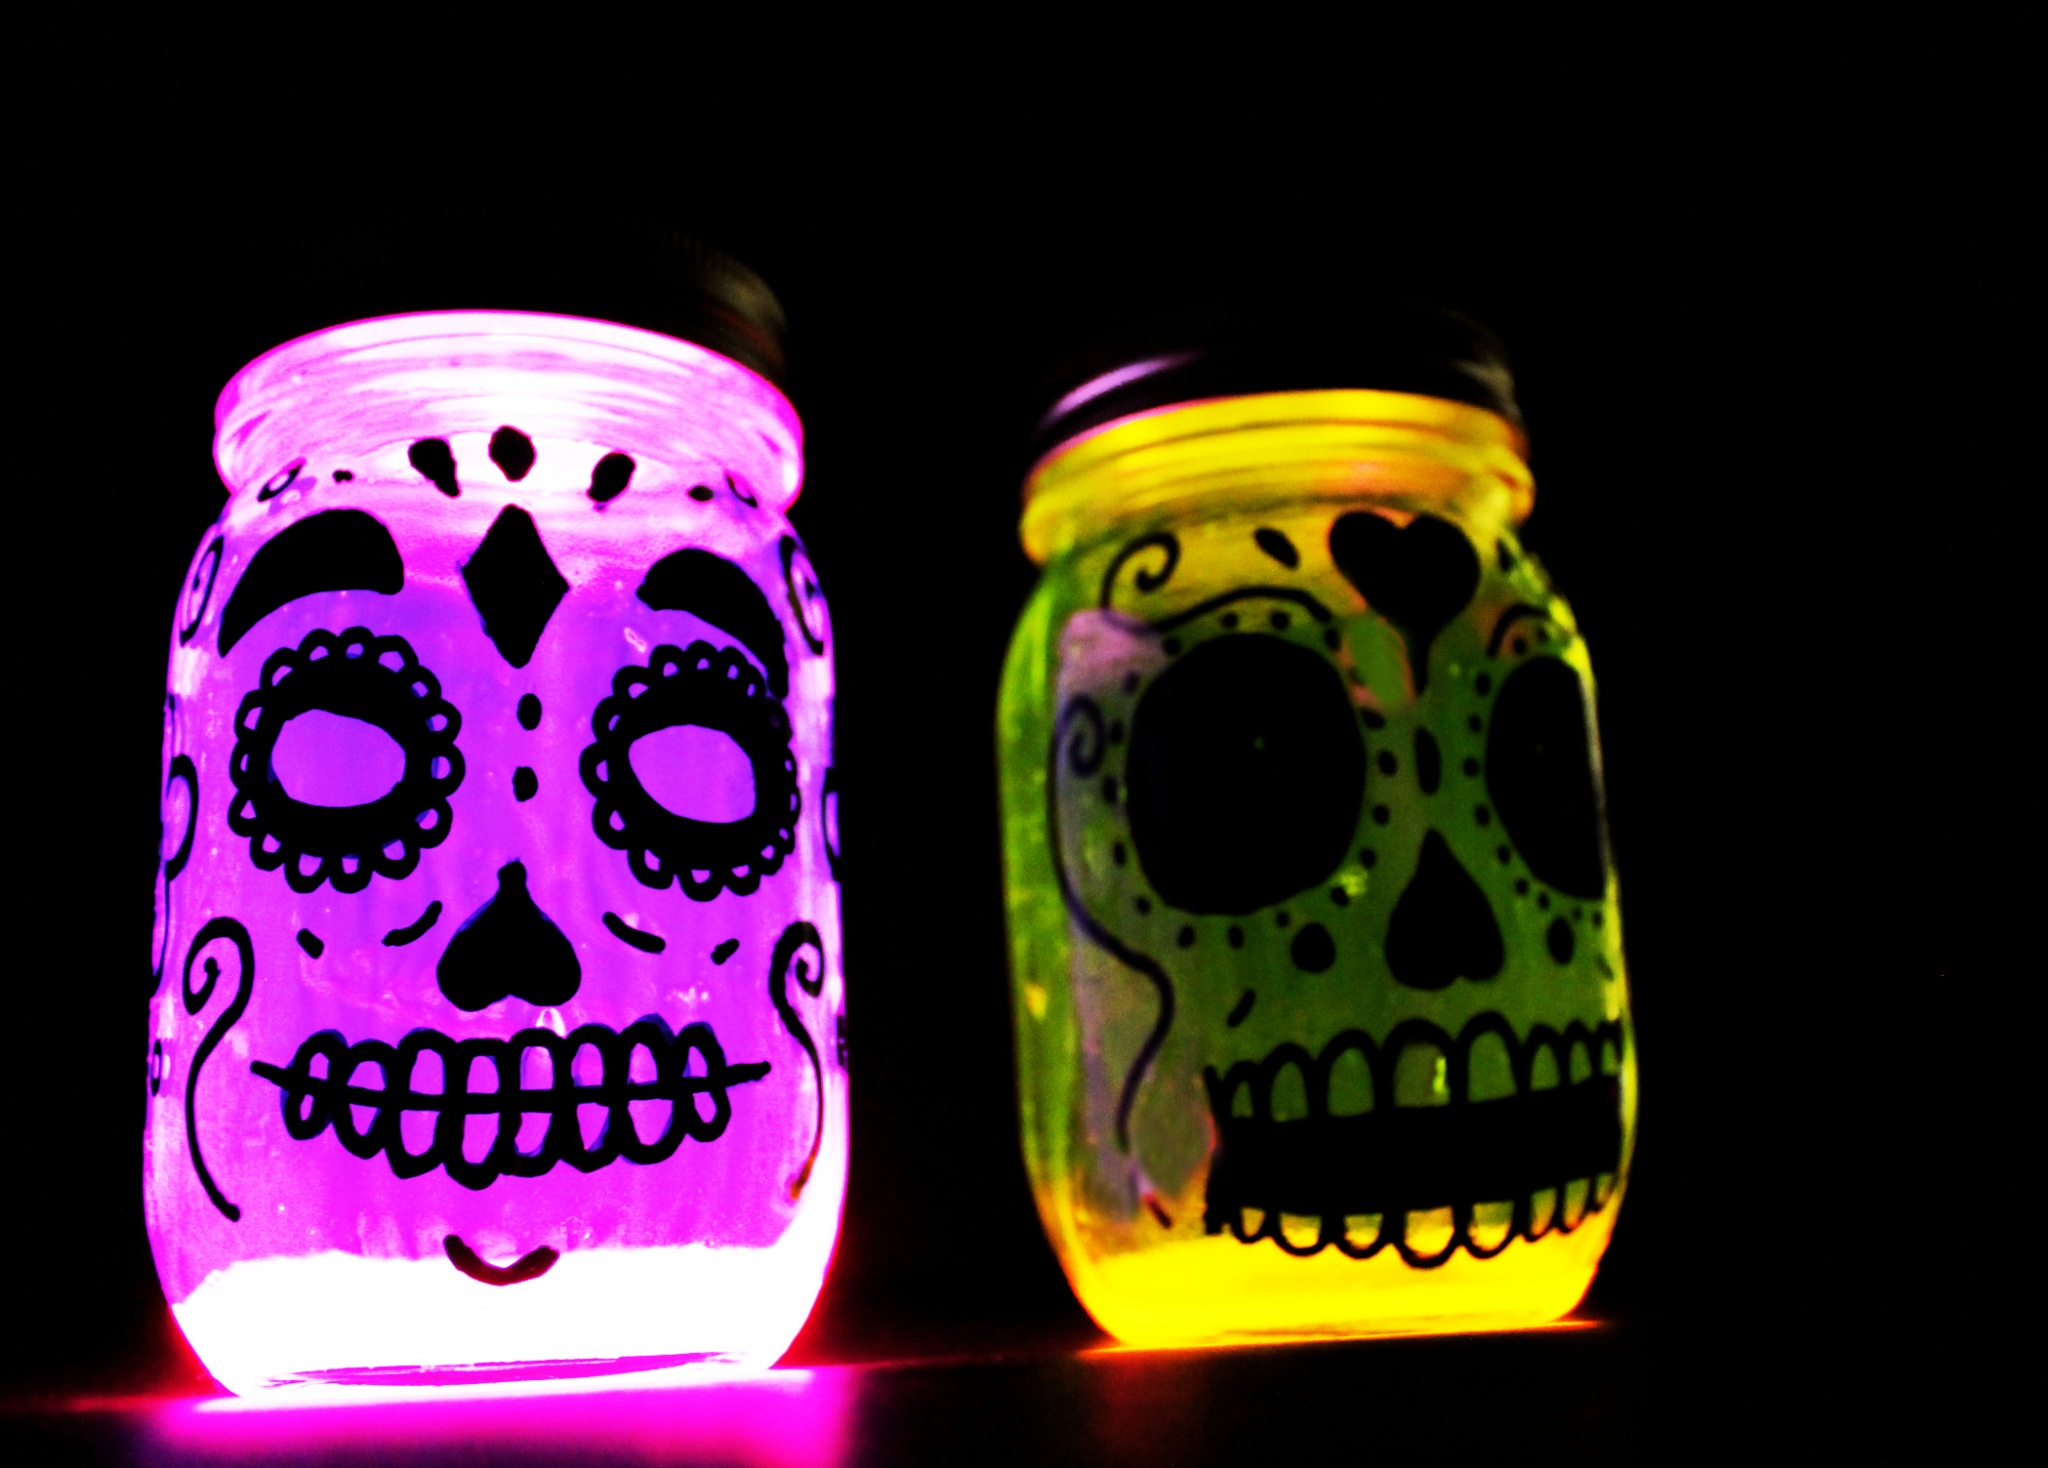 Glow in the dark Day of the Dead or Dia de los Muertos skull lanterns made with mason jars.